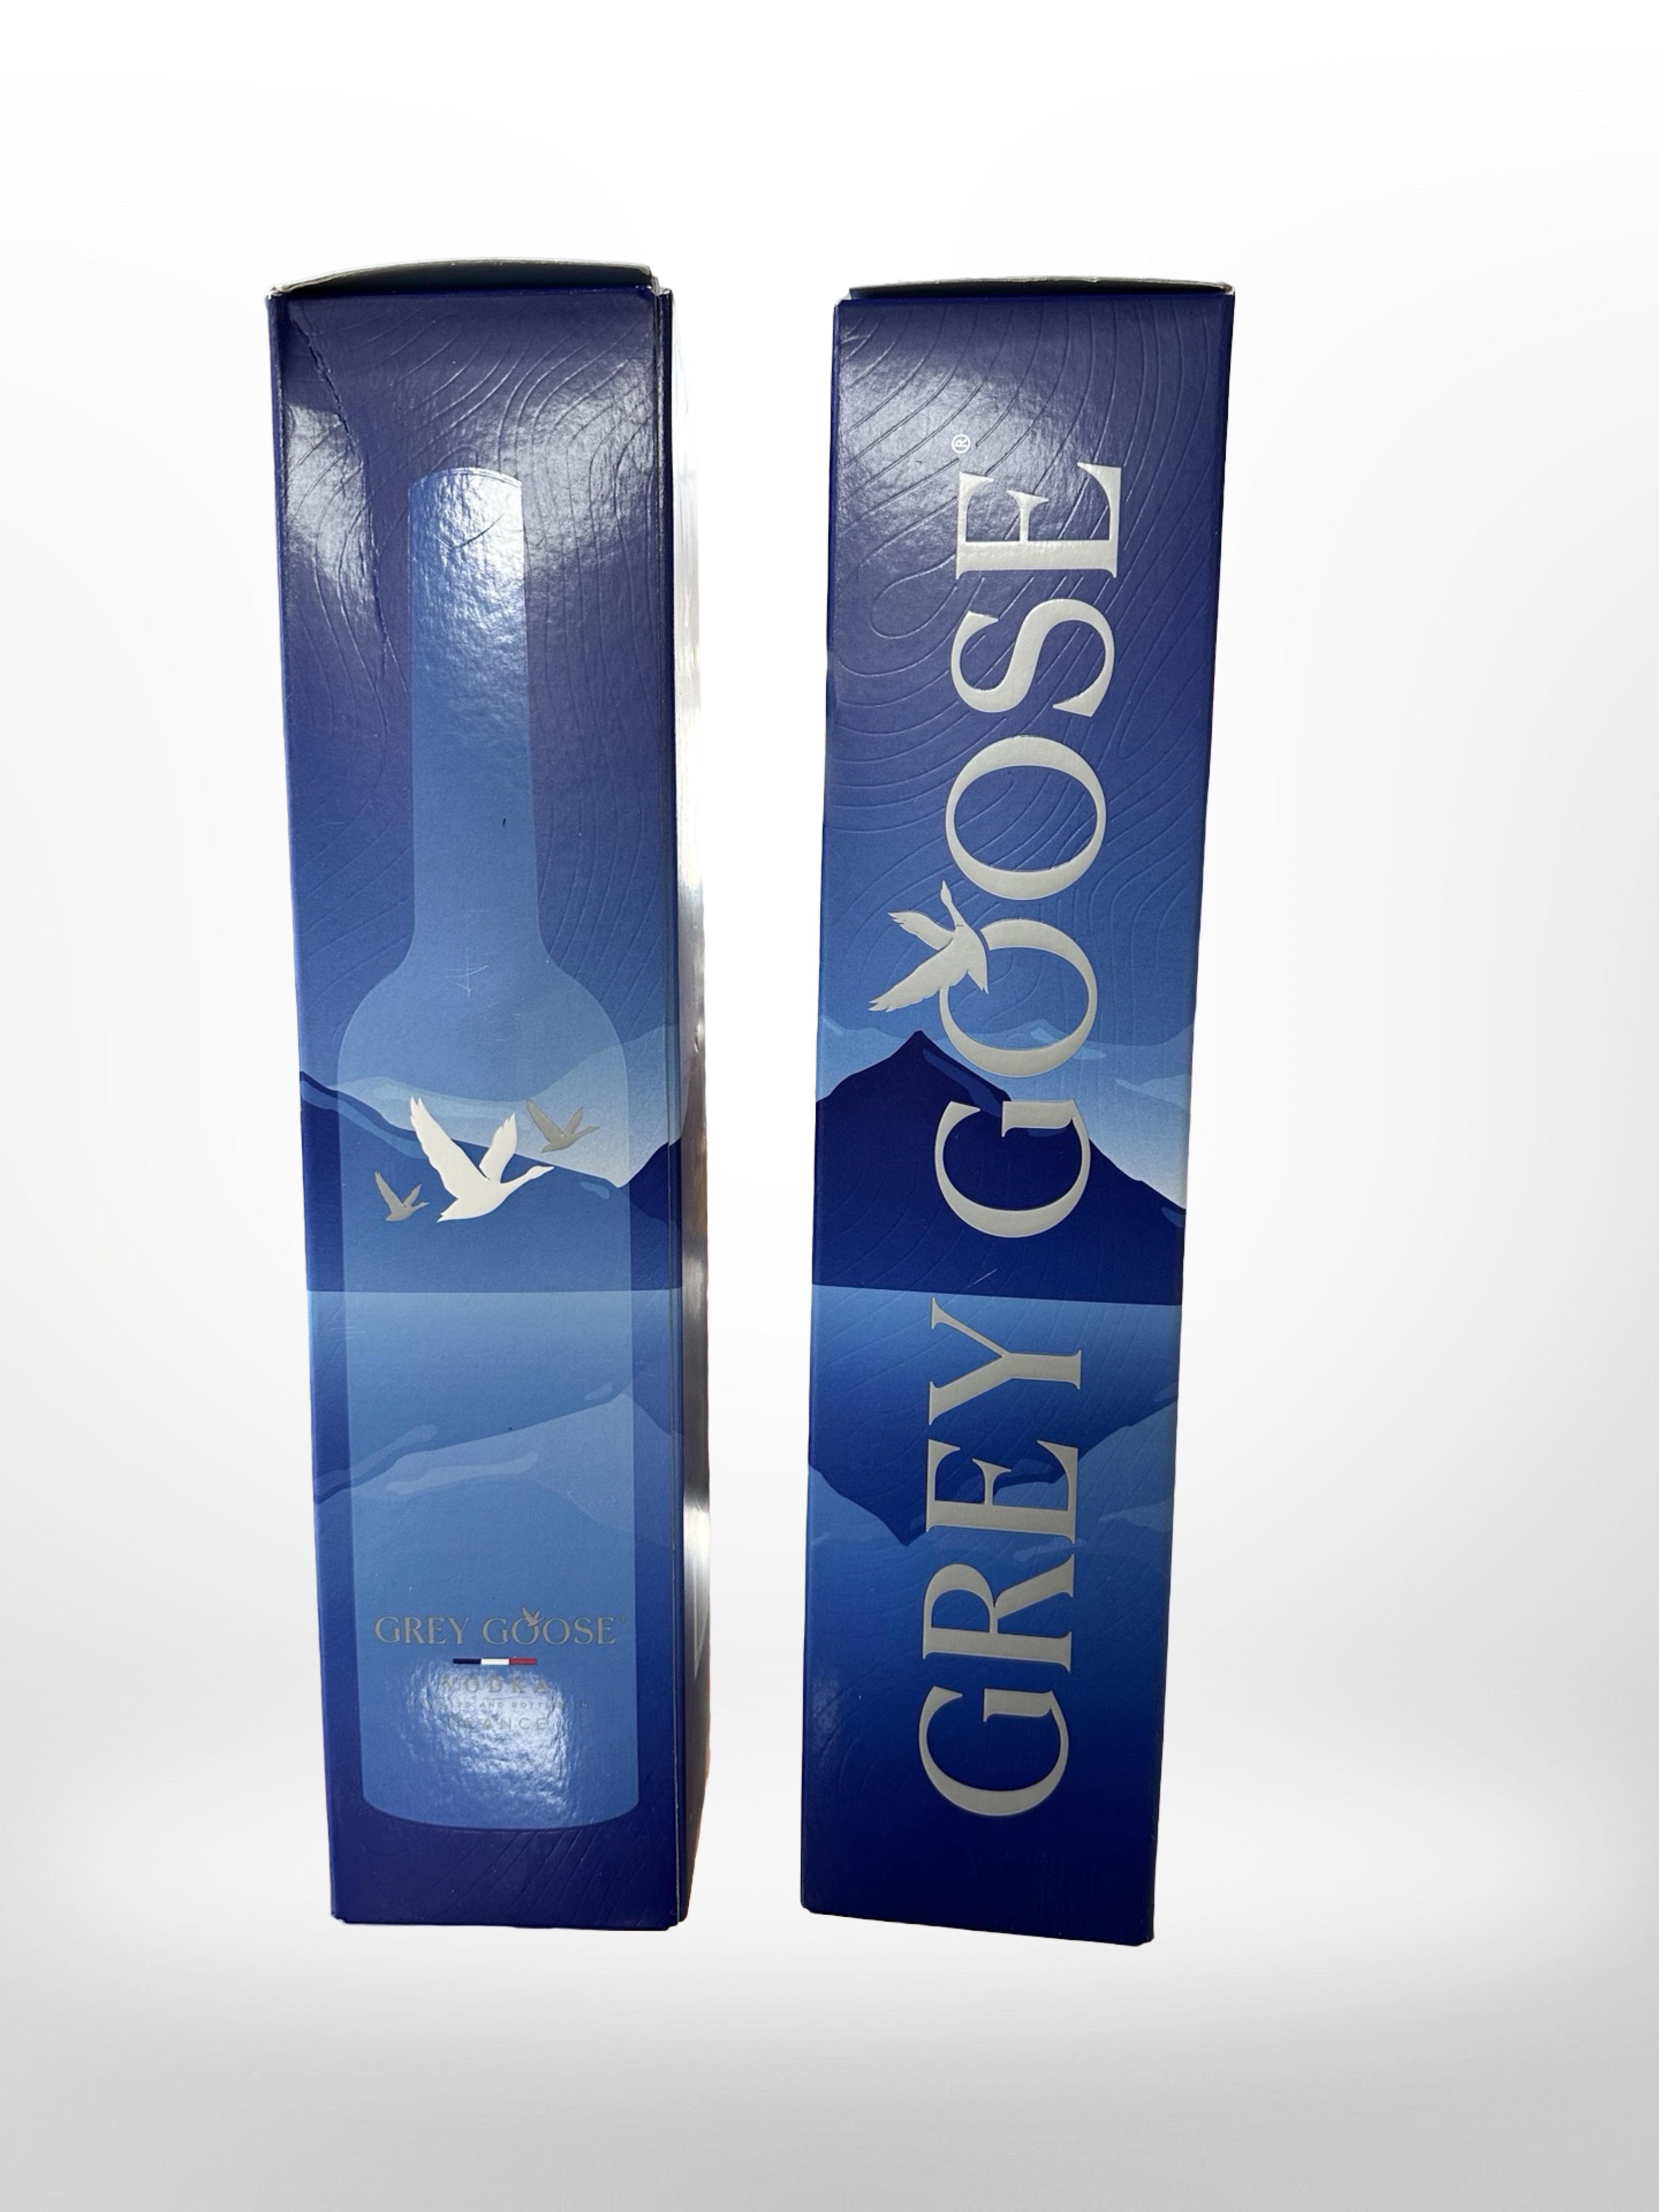 Two bottles of Grey Goose vodka, 700ml, 40% vol, in carton.